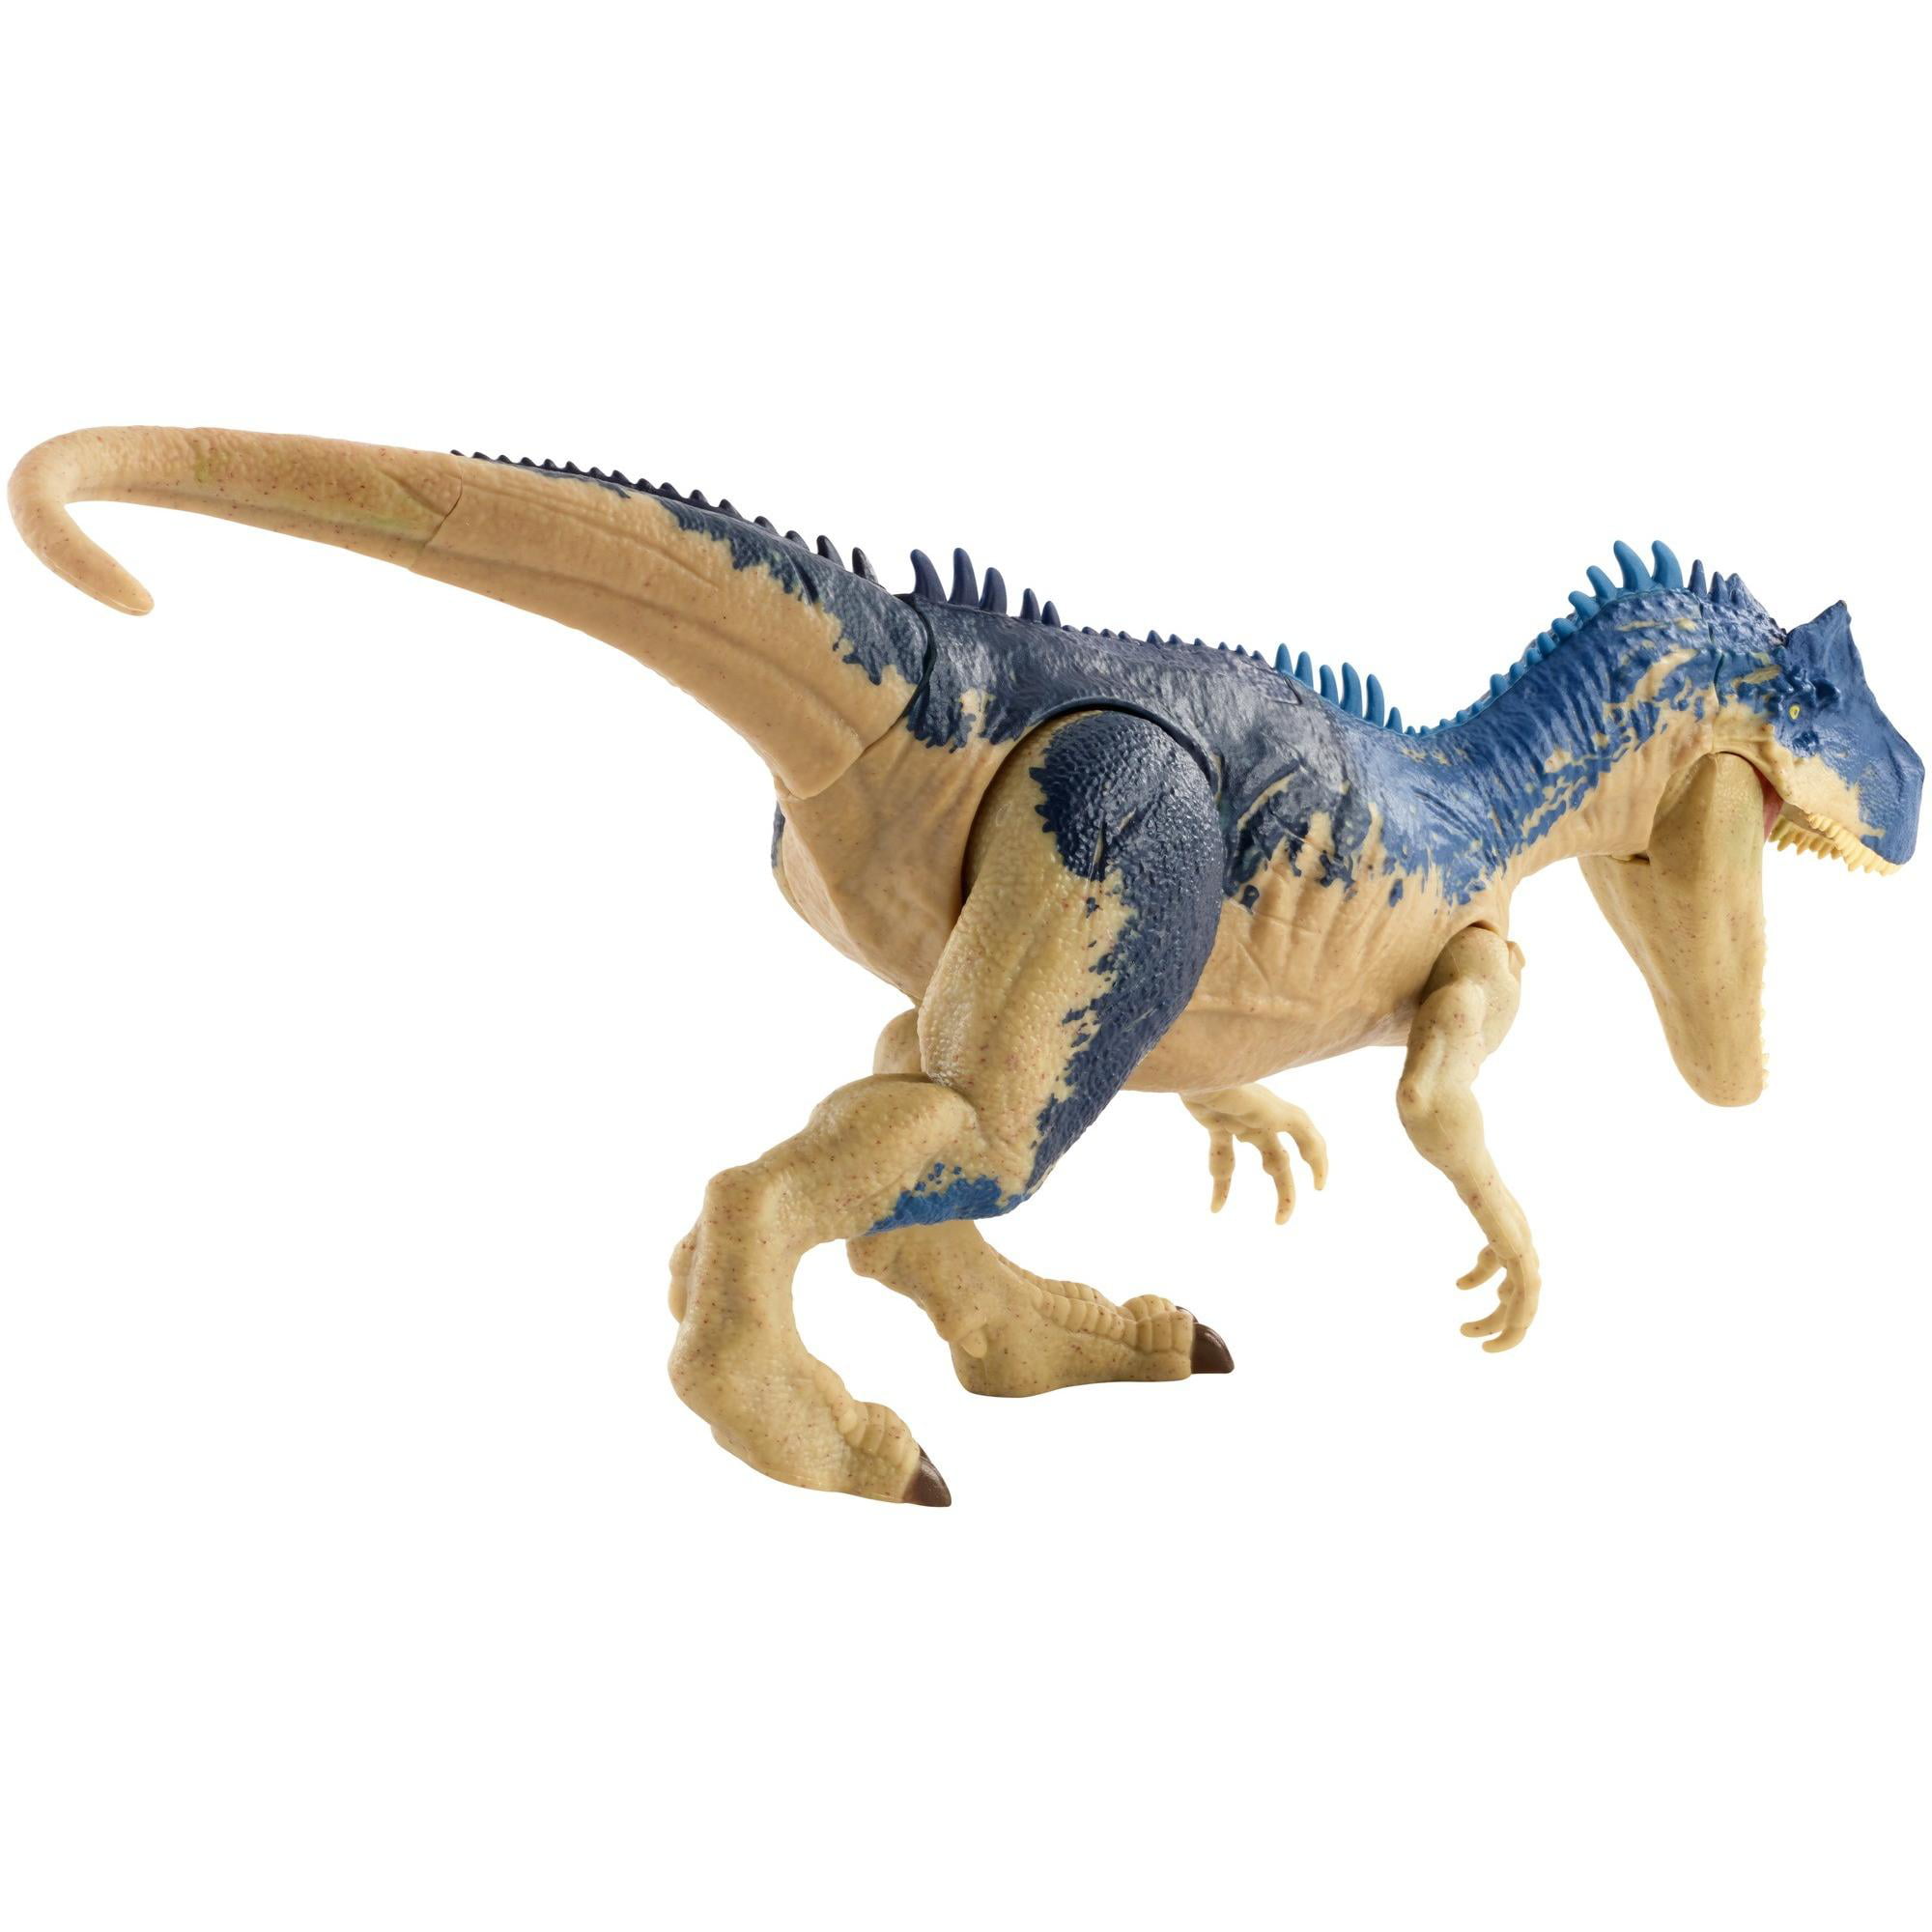 Jurassic World Dual Attack Allosaurus Great Gift for Children on Christmas for sale online 